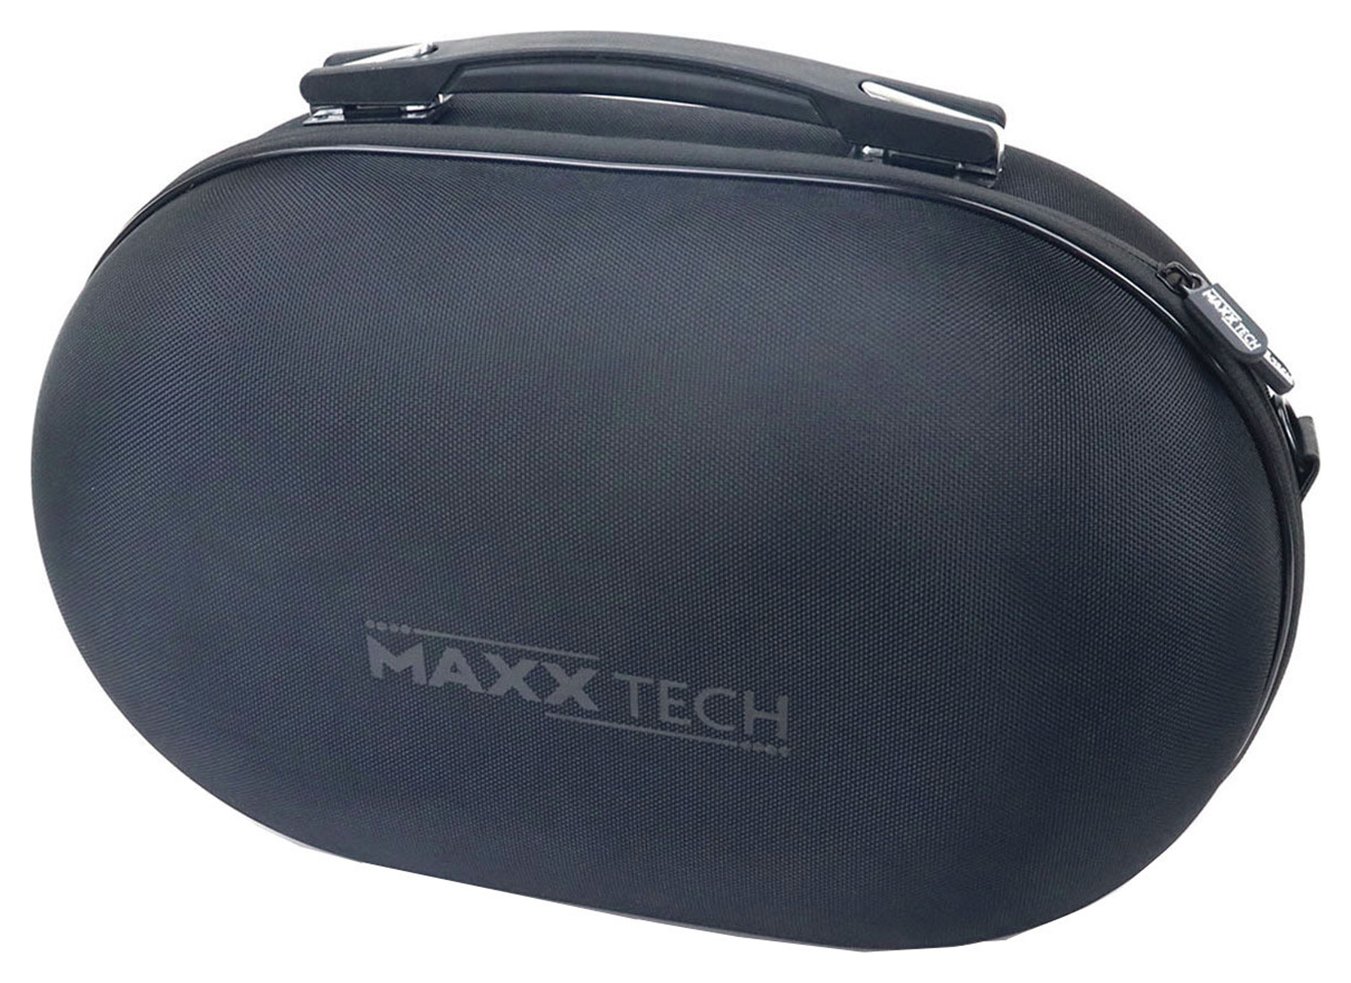 Maxx Tech VR Carry Case Kit For VR Headset